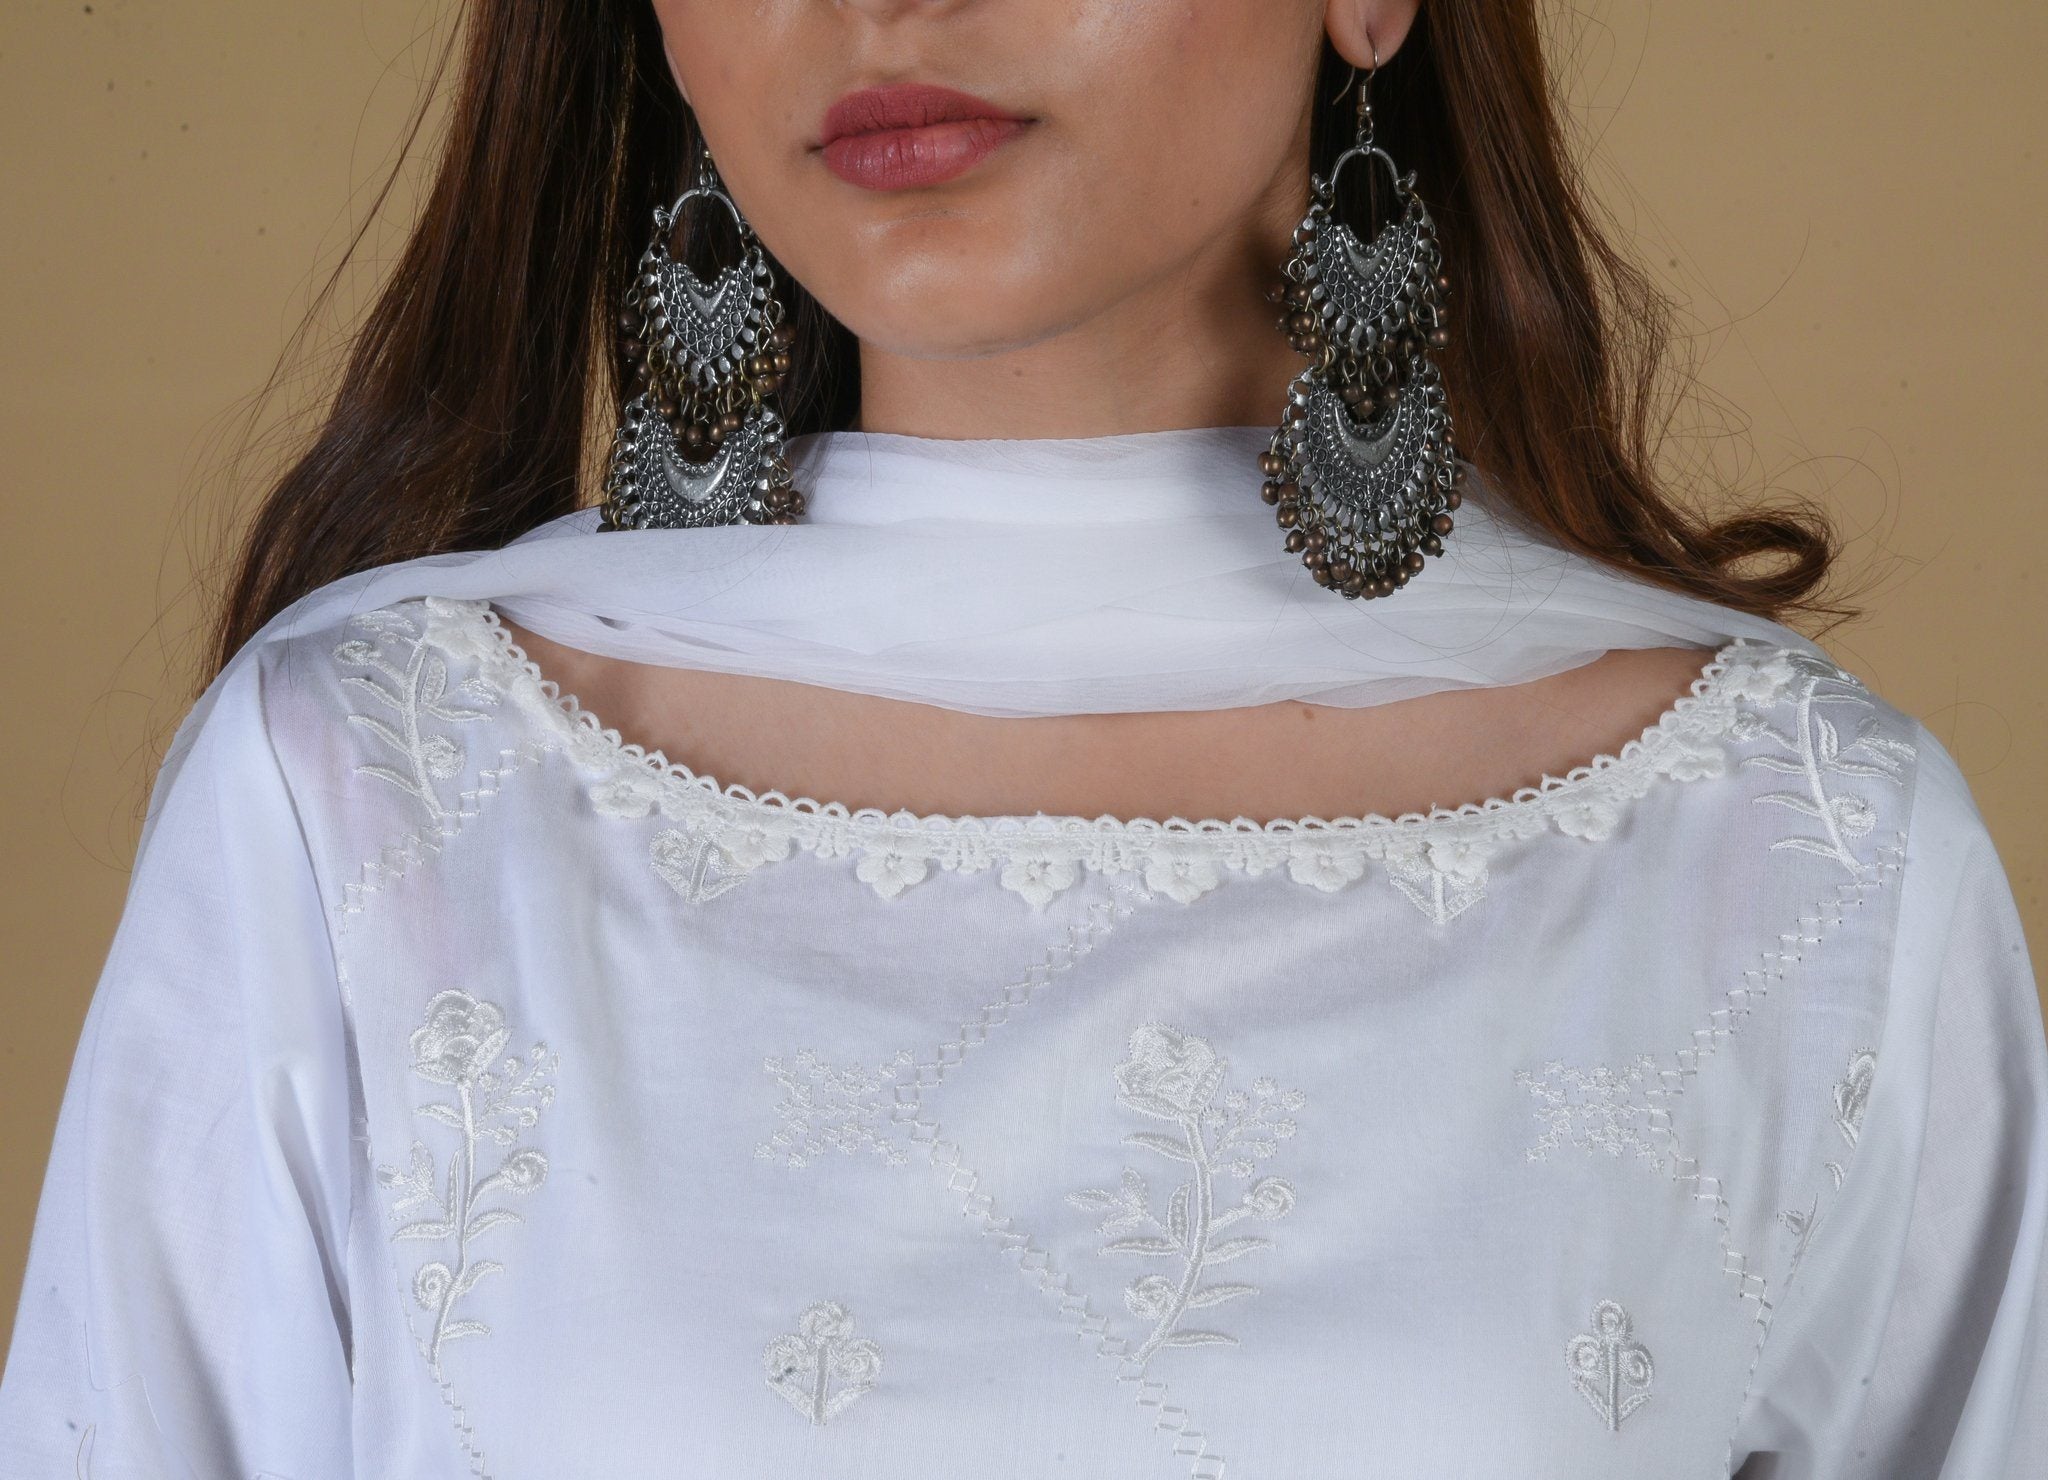 Daisy White Boat Neck Embroidered Suit Set - Neetika Chopra